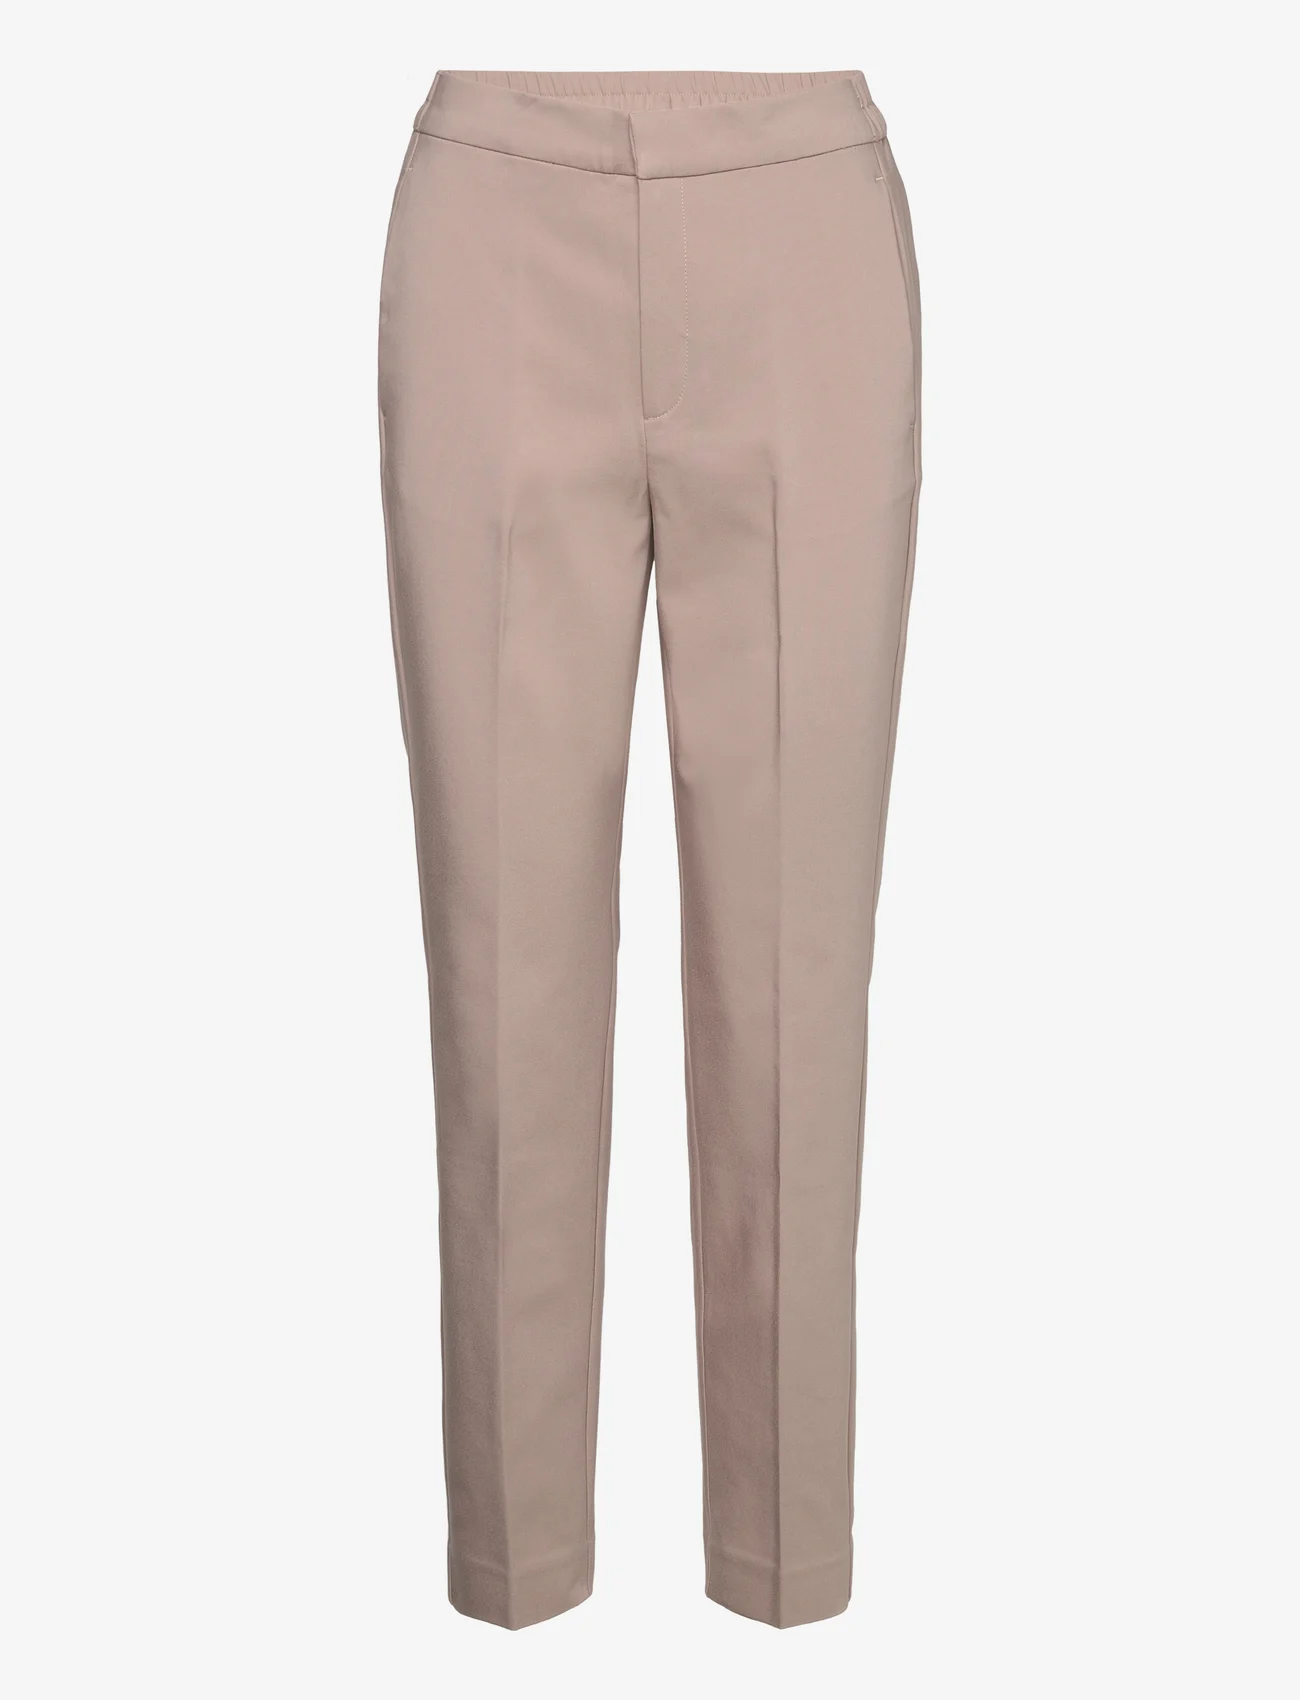 InWear - ZellaIW Flat Pant - dressbukser - mocha grey - 0